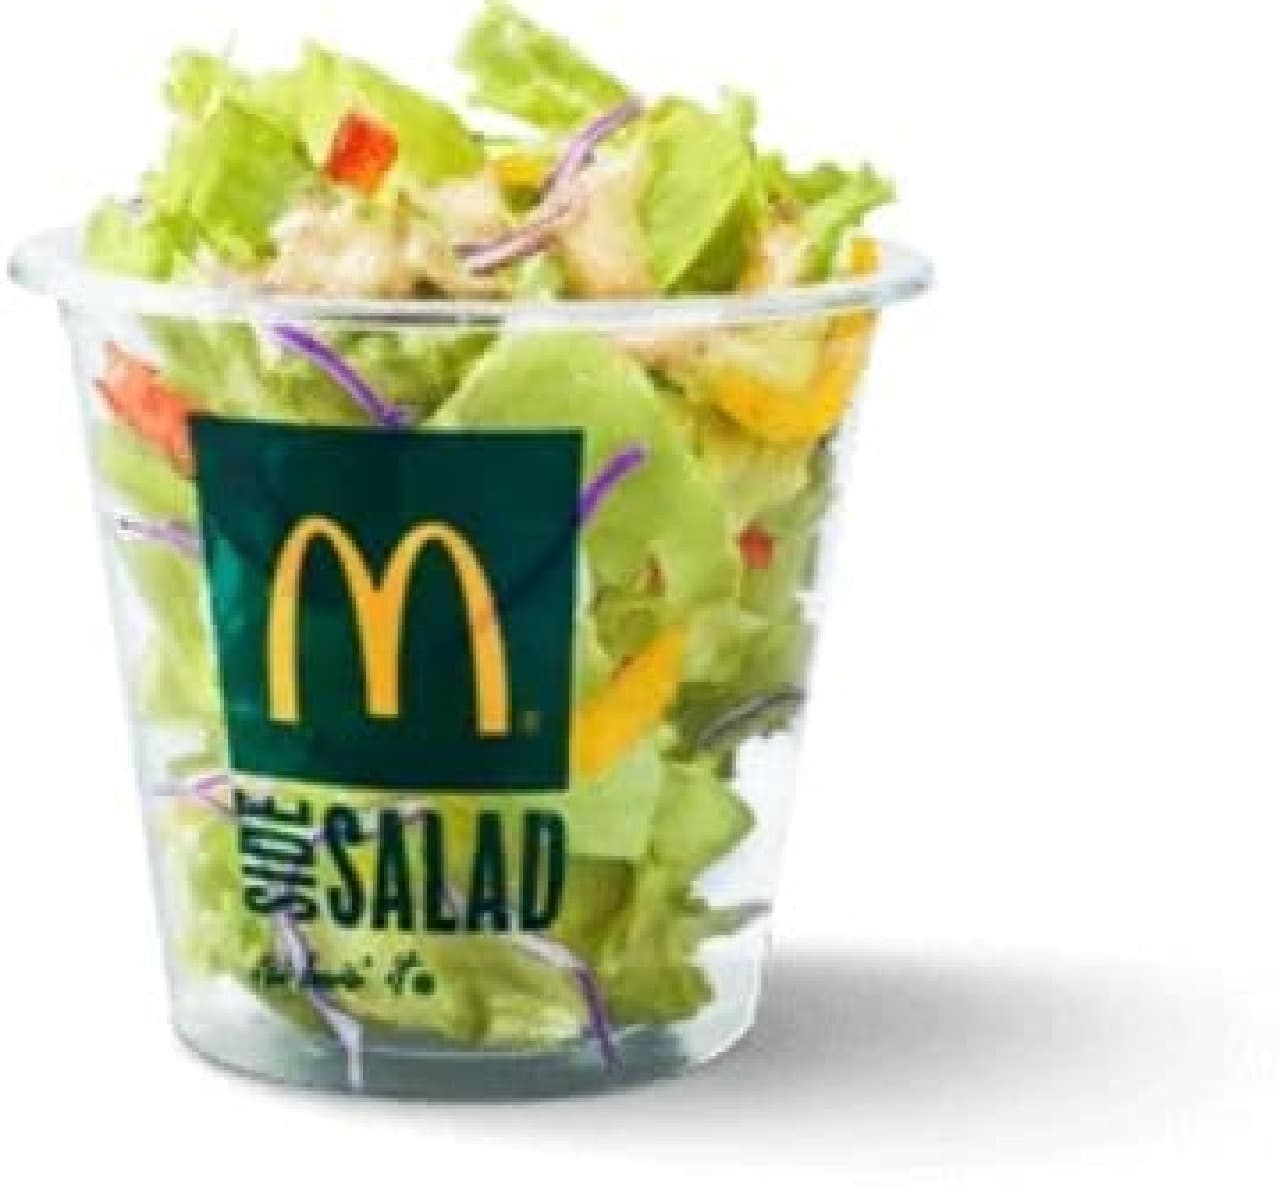 McDonald's "Side Salad"